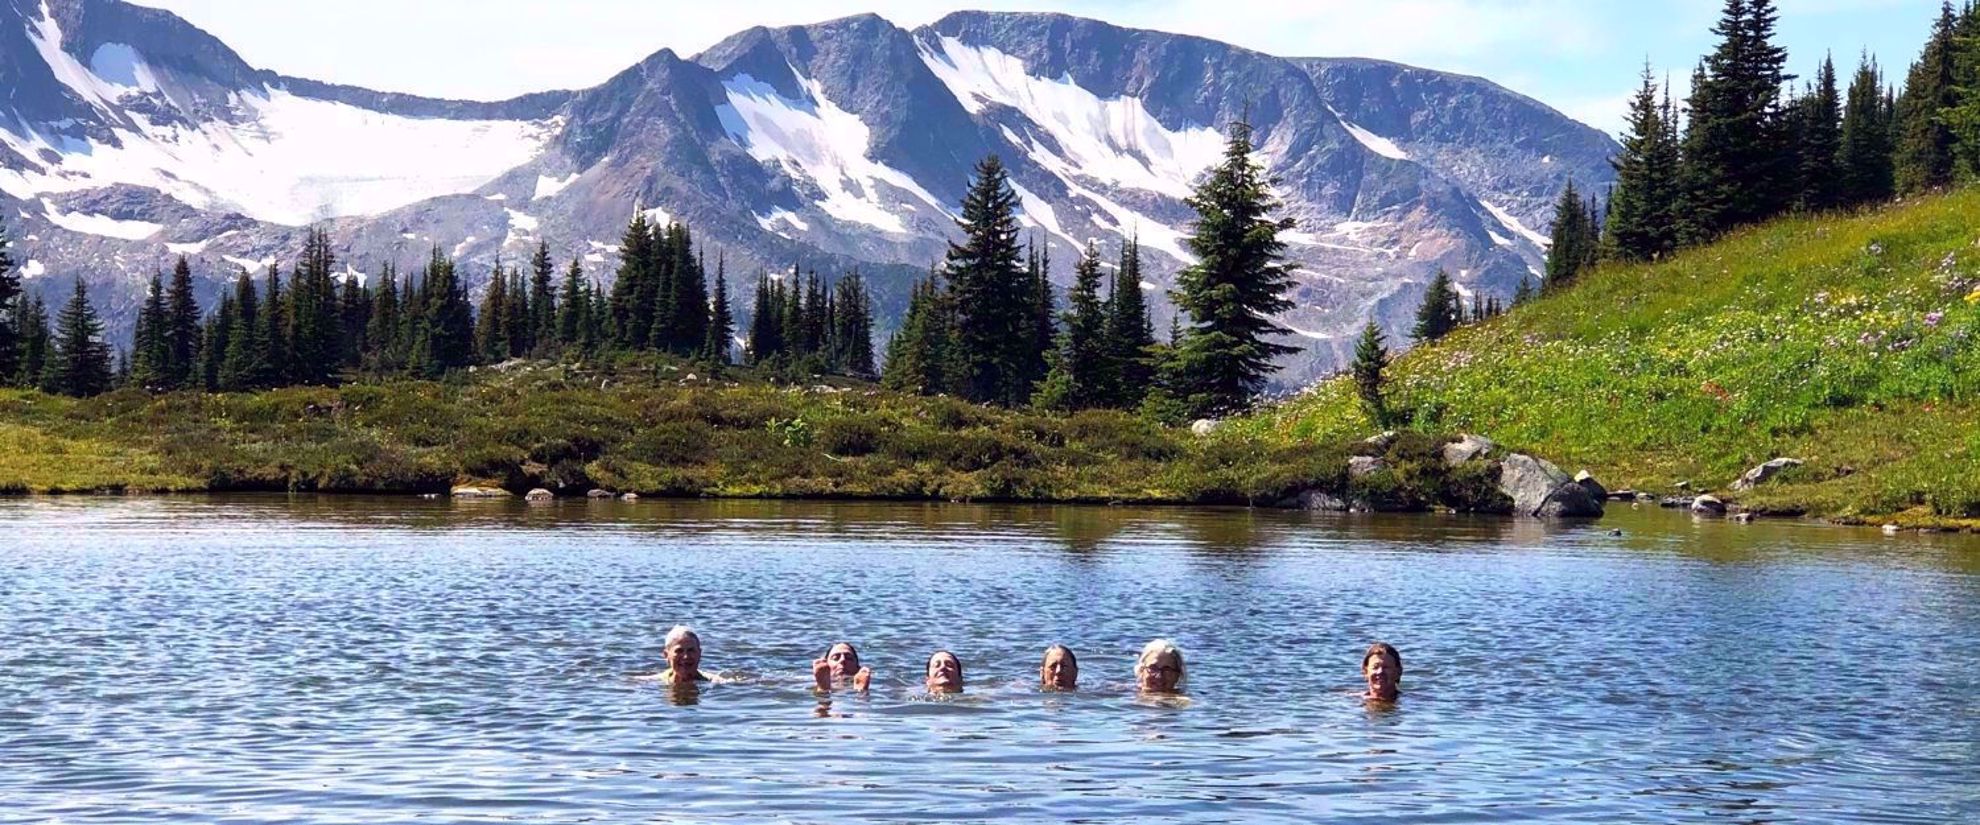 swimming in high mountain lakes